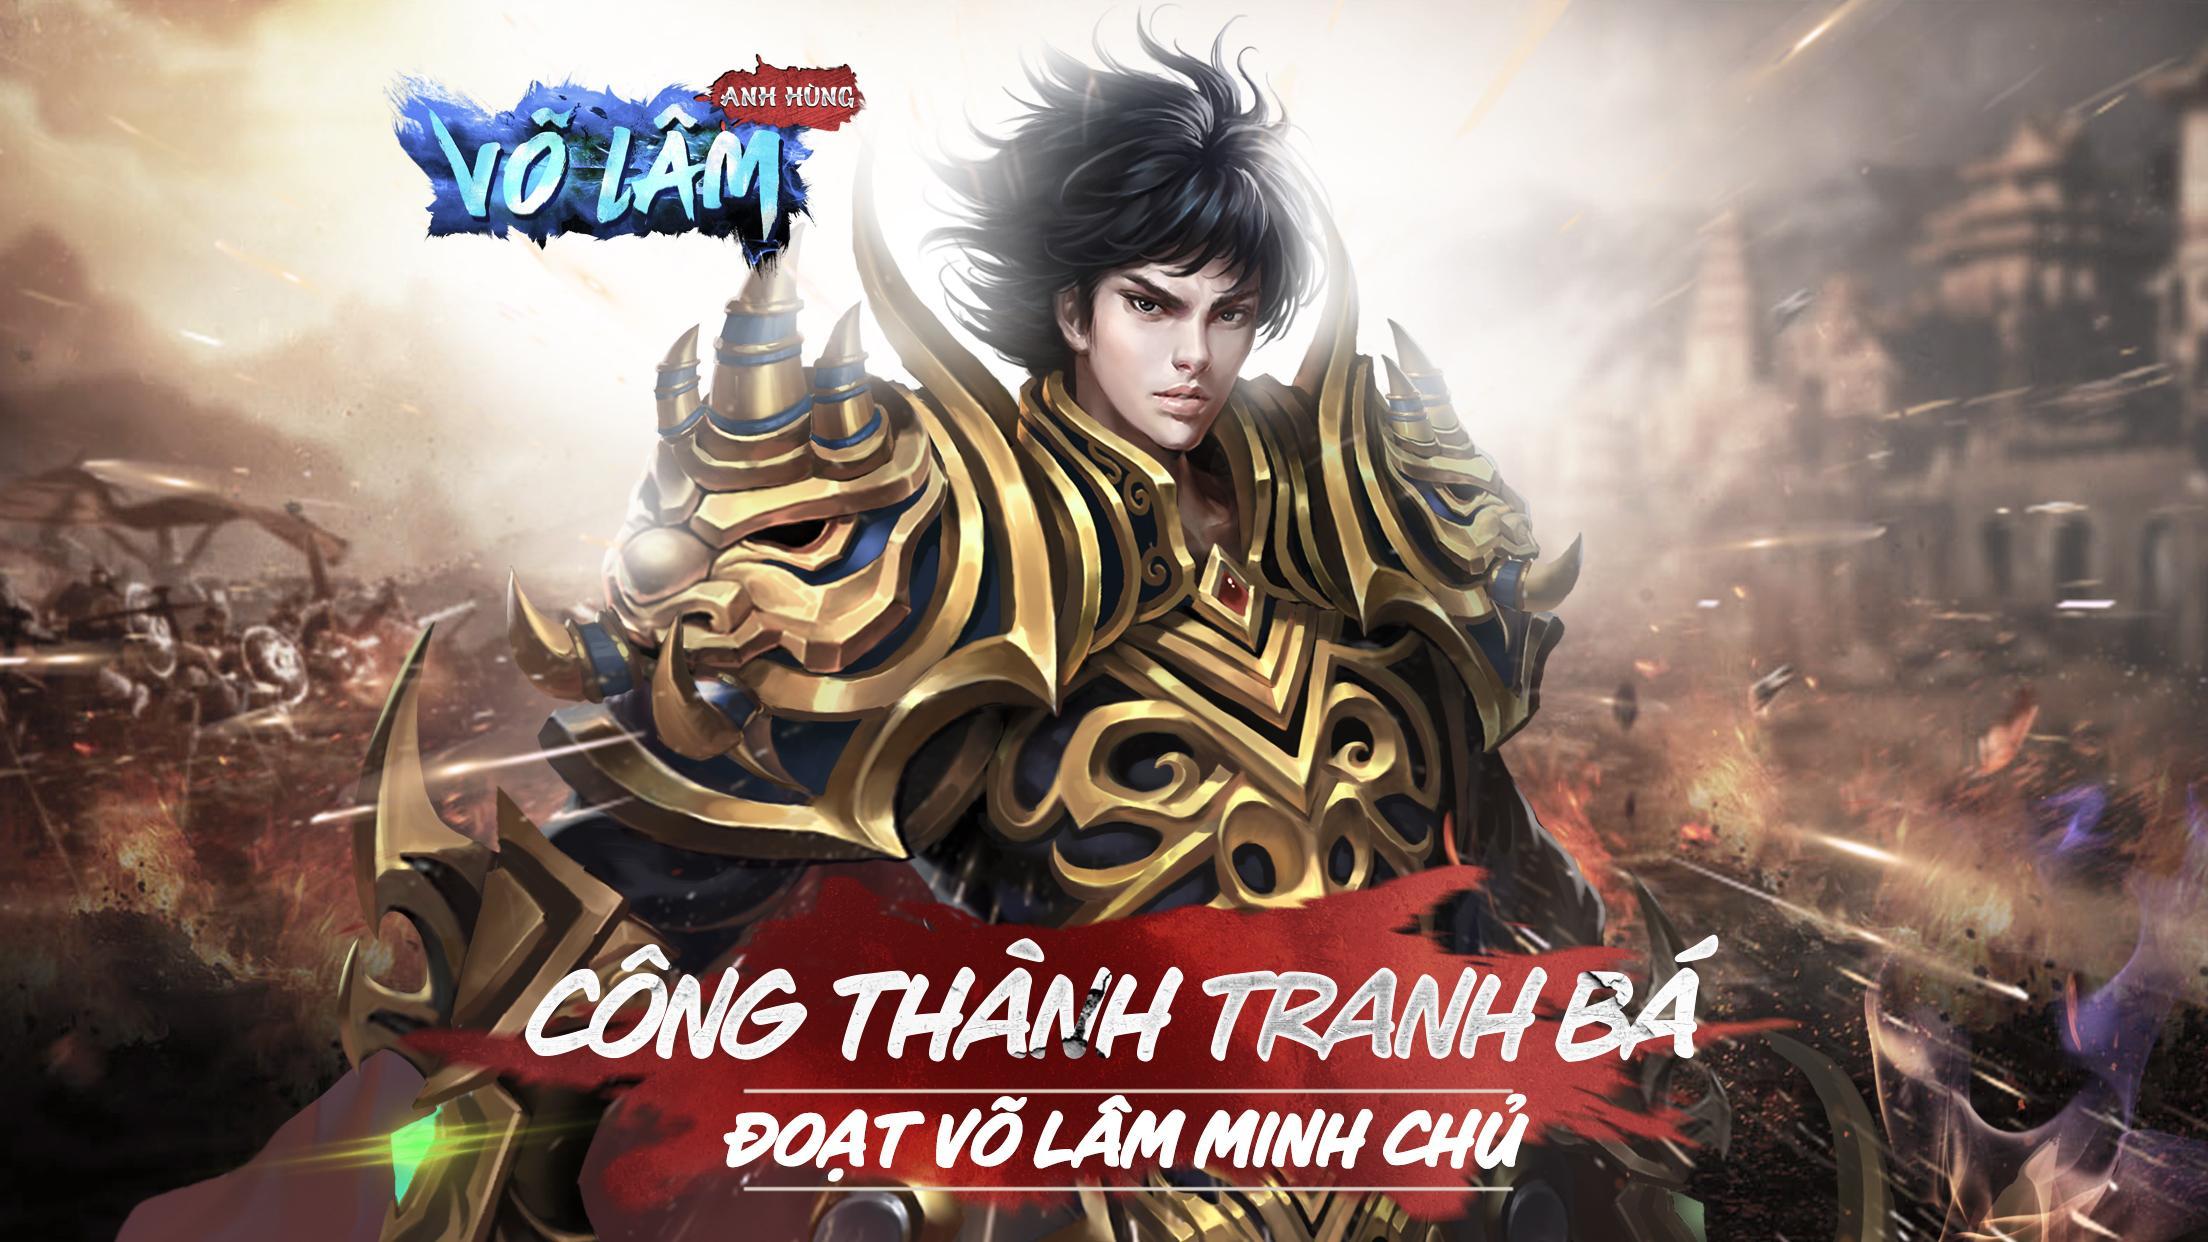 Screenshot 1 of Wira Vo Lam-Cong Thanh 1.0.99635.100